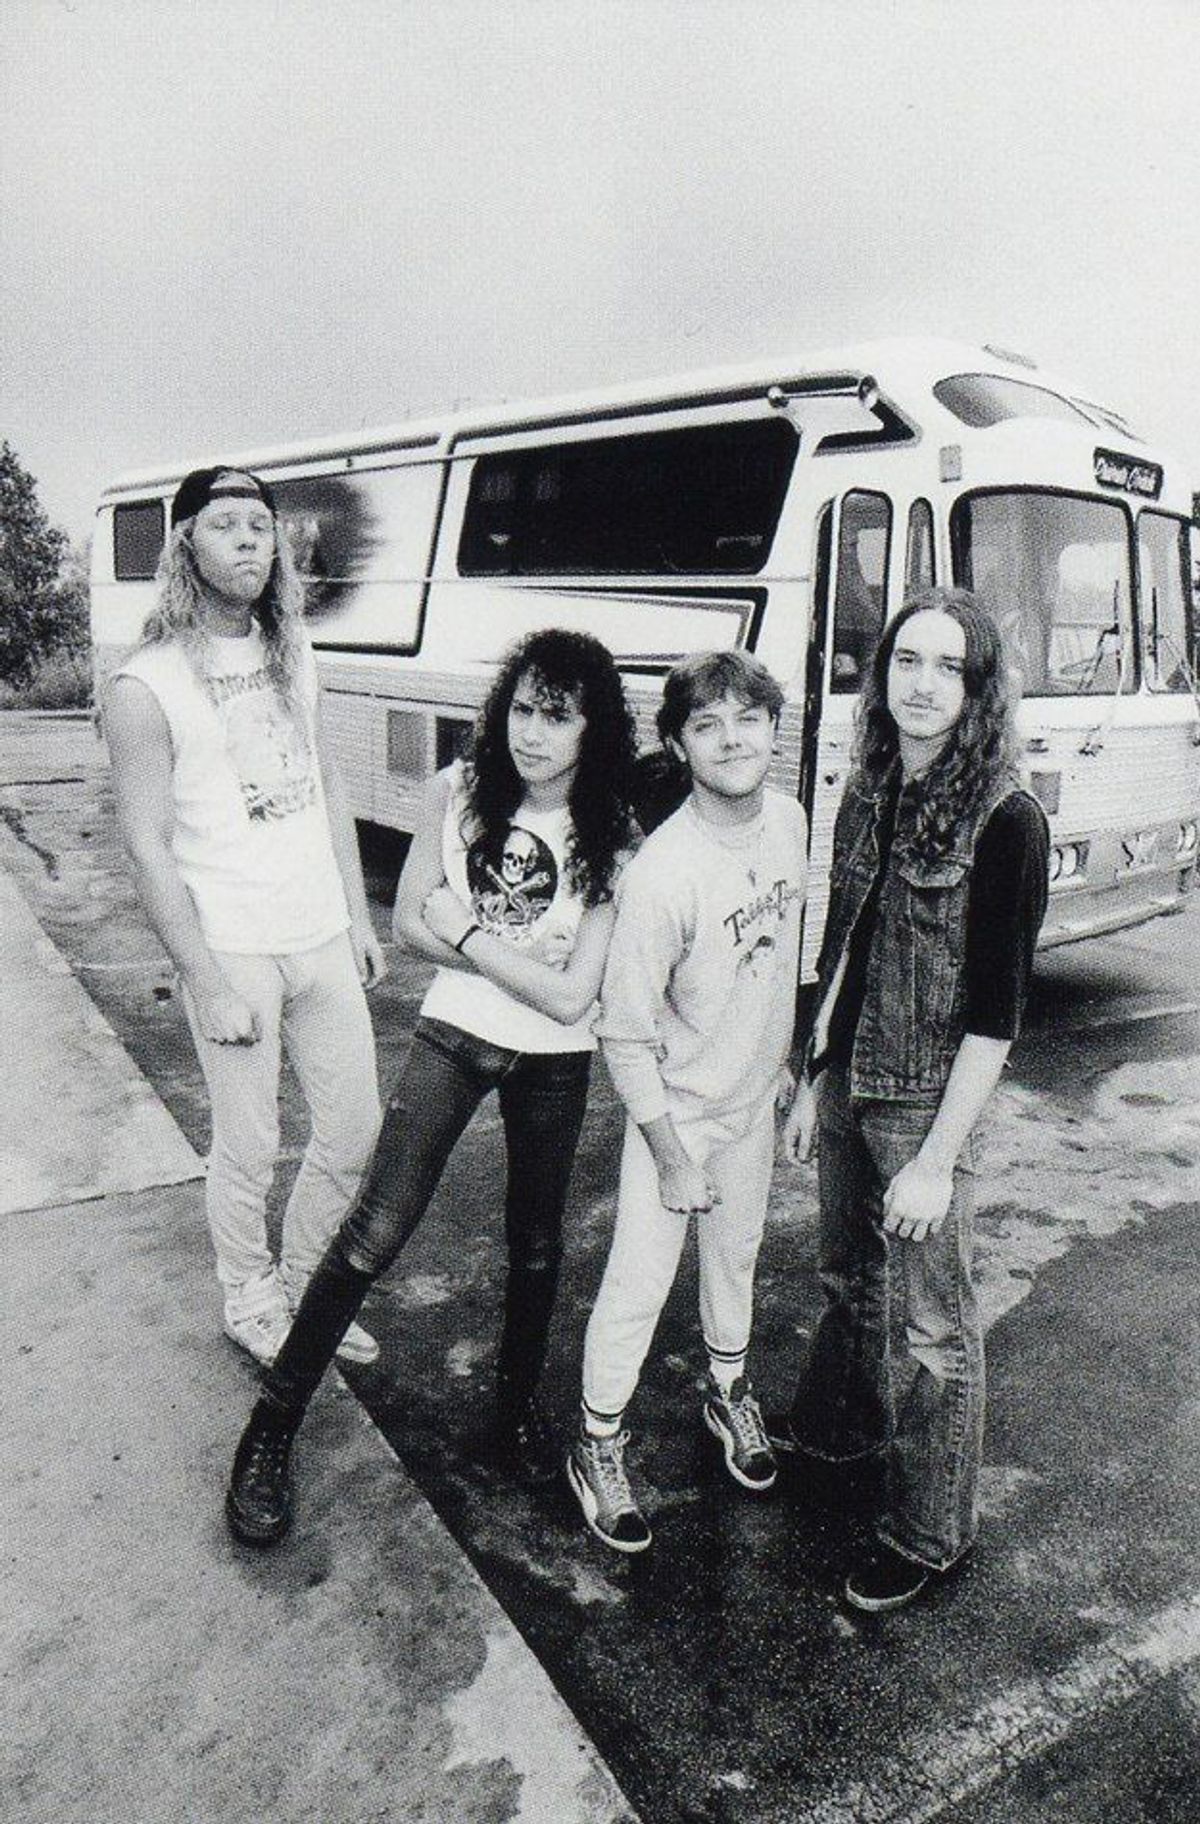 1986: Cliff Burton (Metallica) sterft na ongeval met tourbus